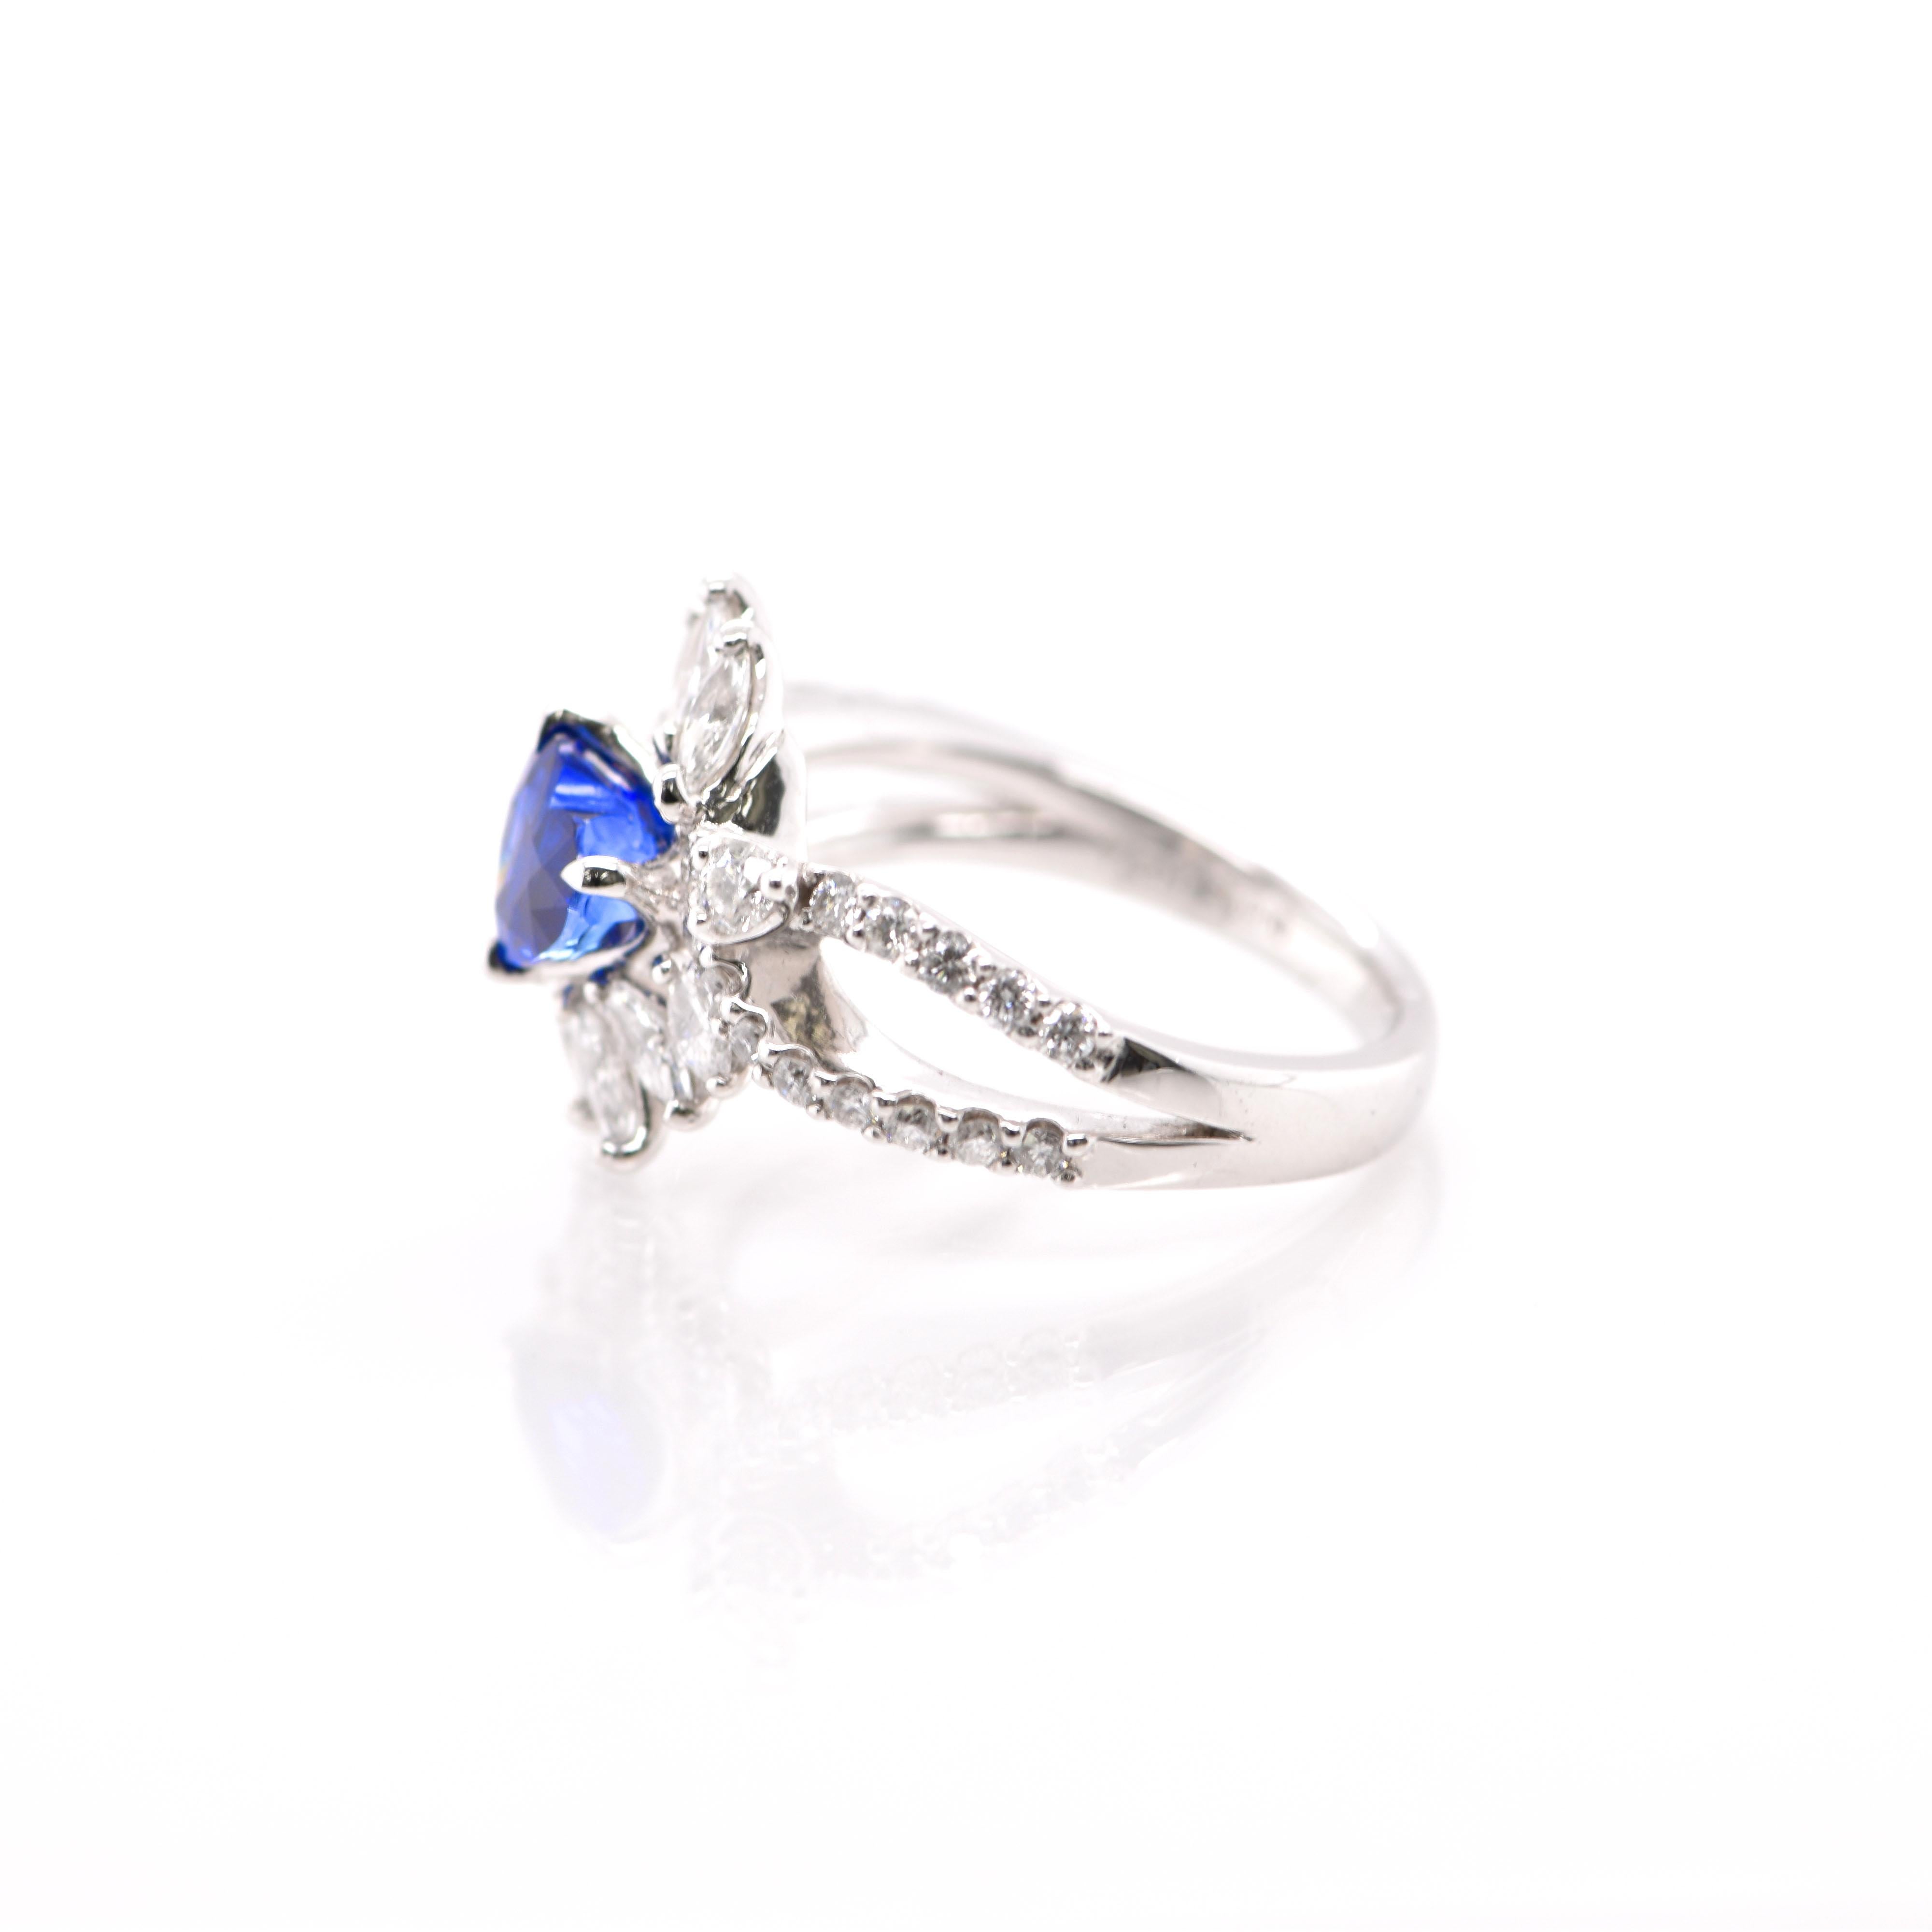 1.37 Carat Sapphire and Diamond Engagement Ring Set in Platinum 1